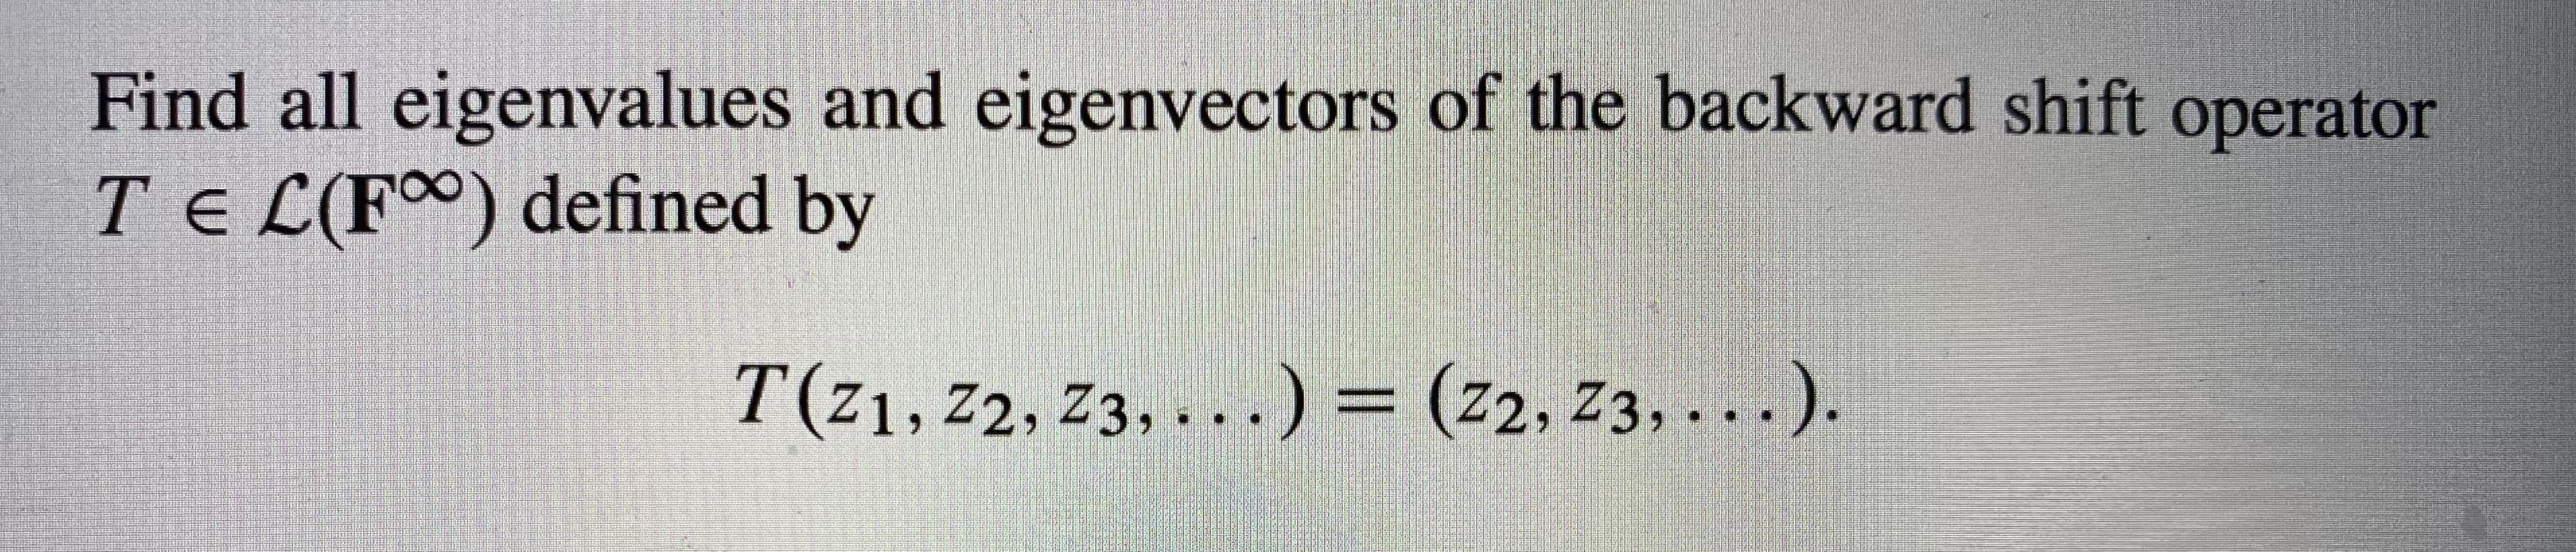 Find all eigenvalues and eigenvectors of the backward shift operator
TE L(F°) defined by
T(z1, 72, Z3, ...)= (z2, 73, ..
